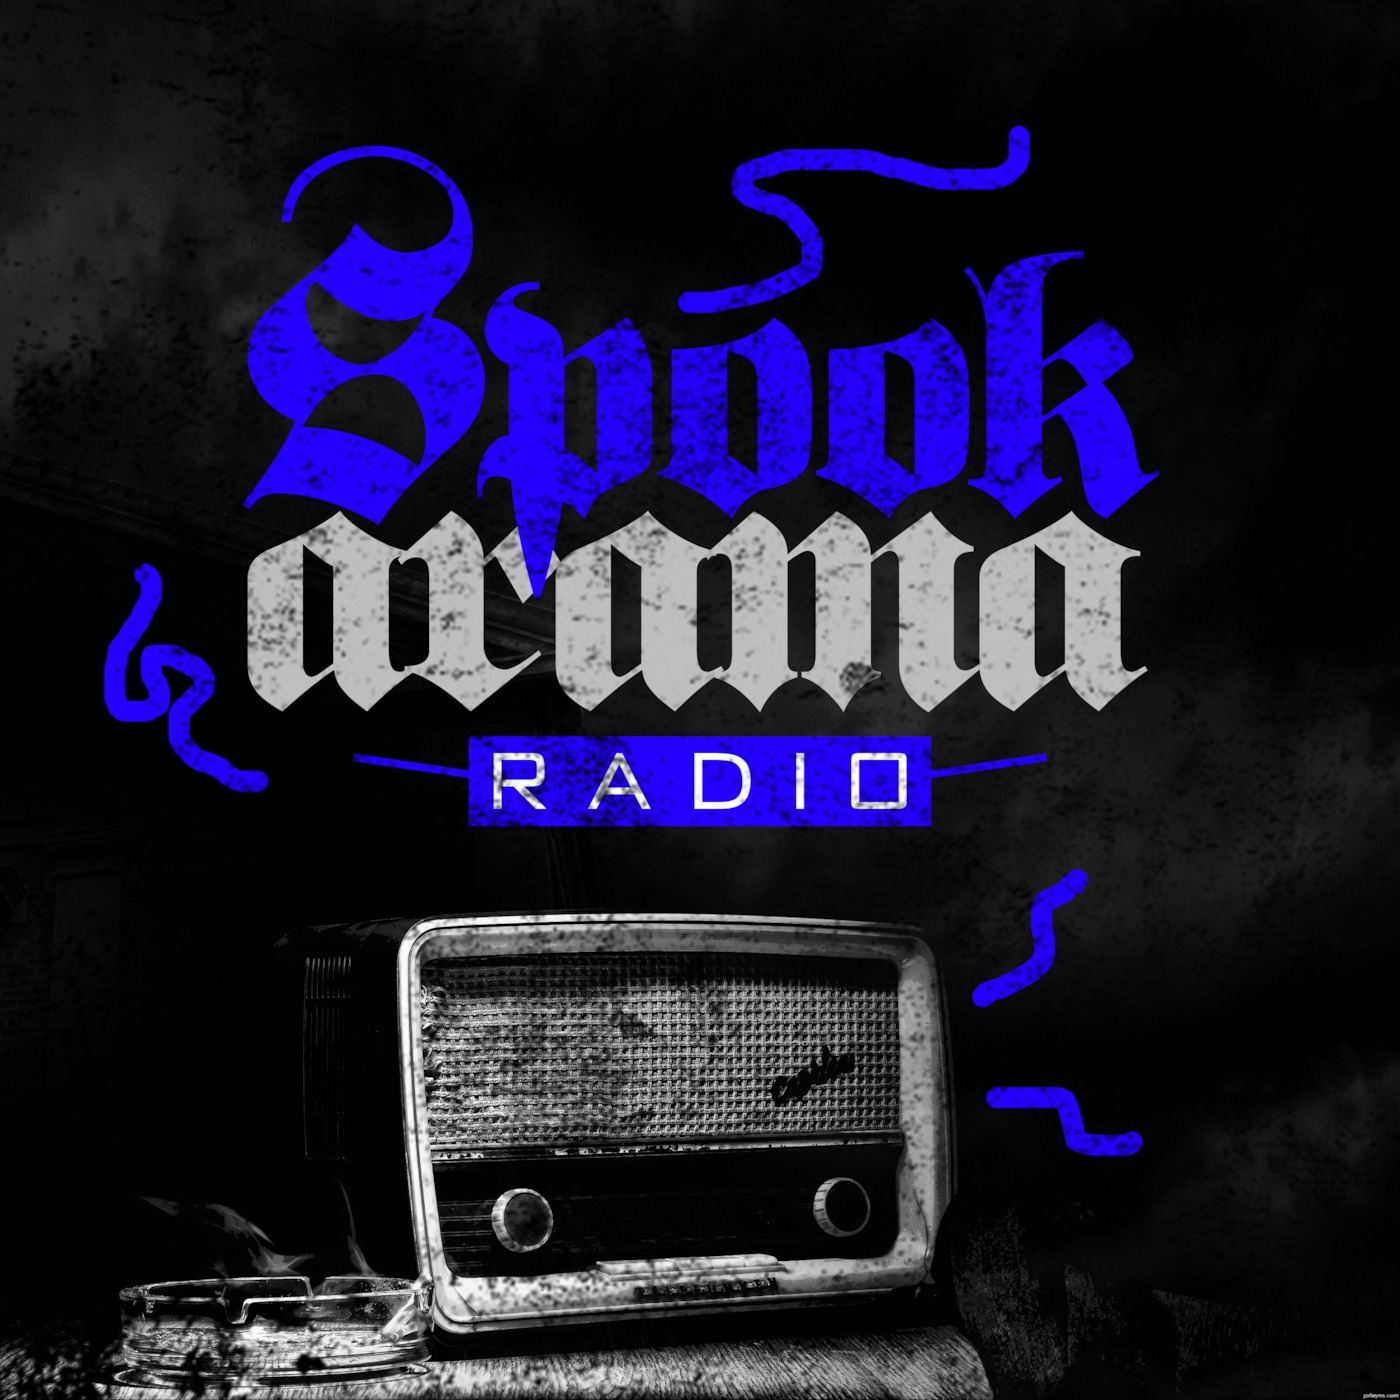 Spookarama Radio